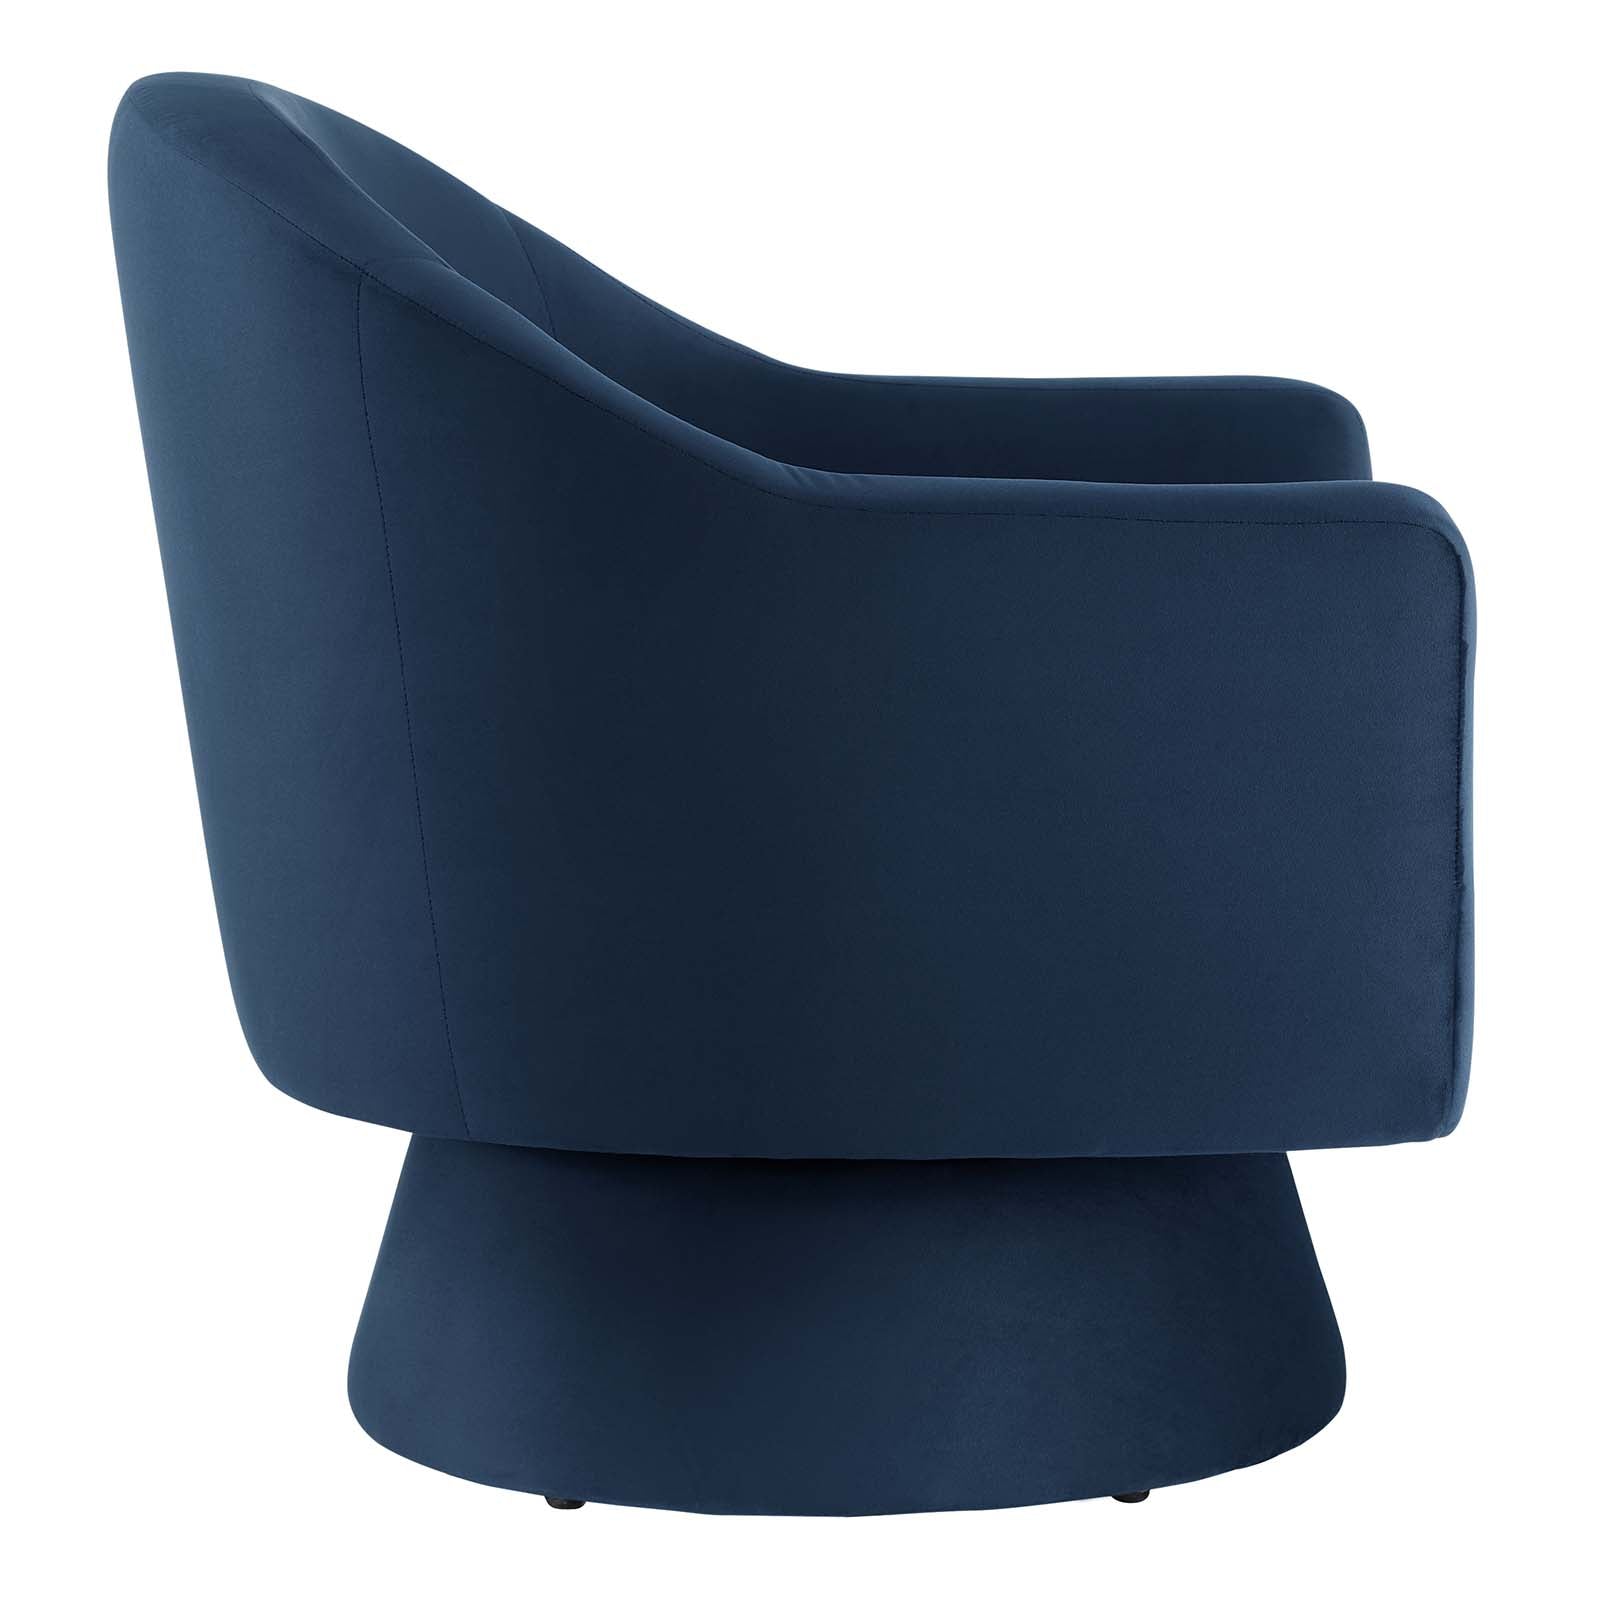 Astral Performance Velvet Fabric and Wood Swivel Chair - East Shore Modern Home Furnishings